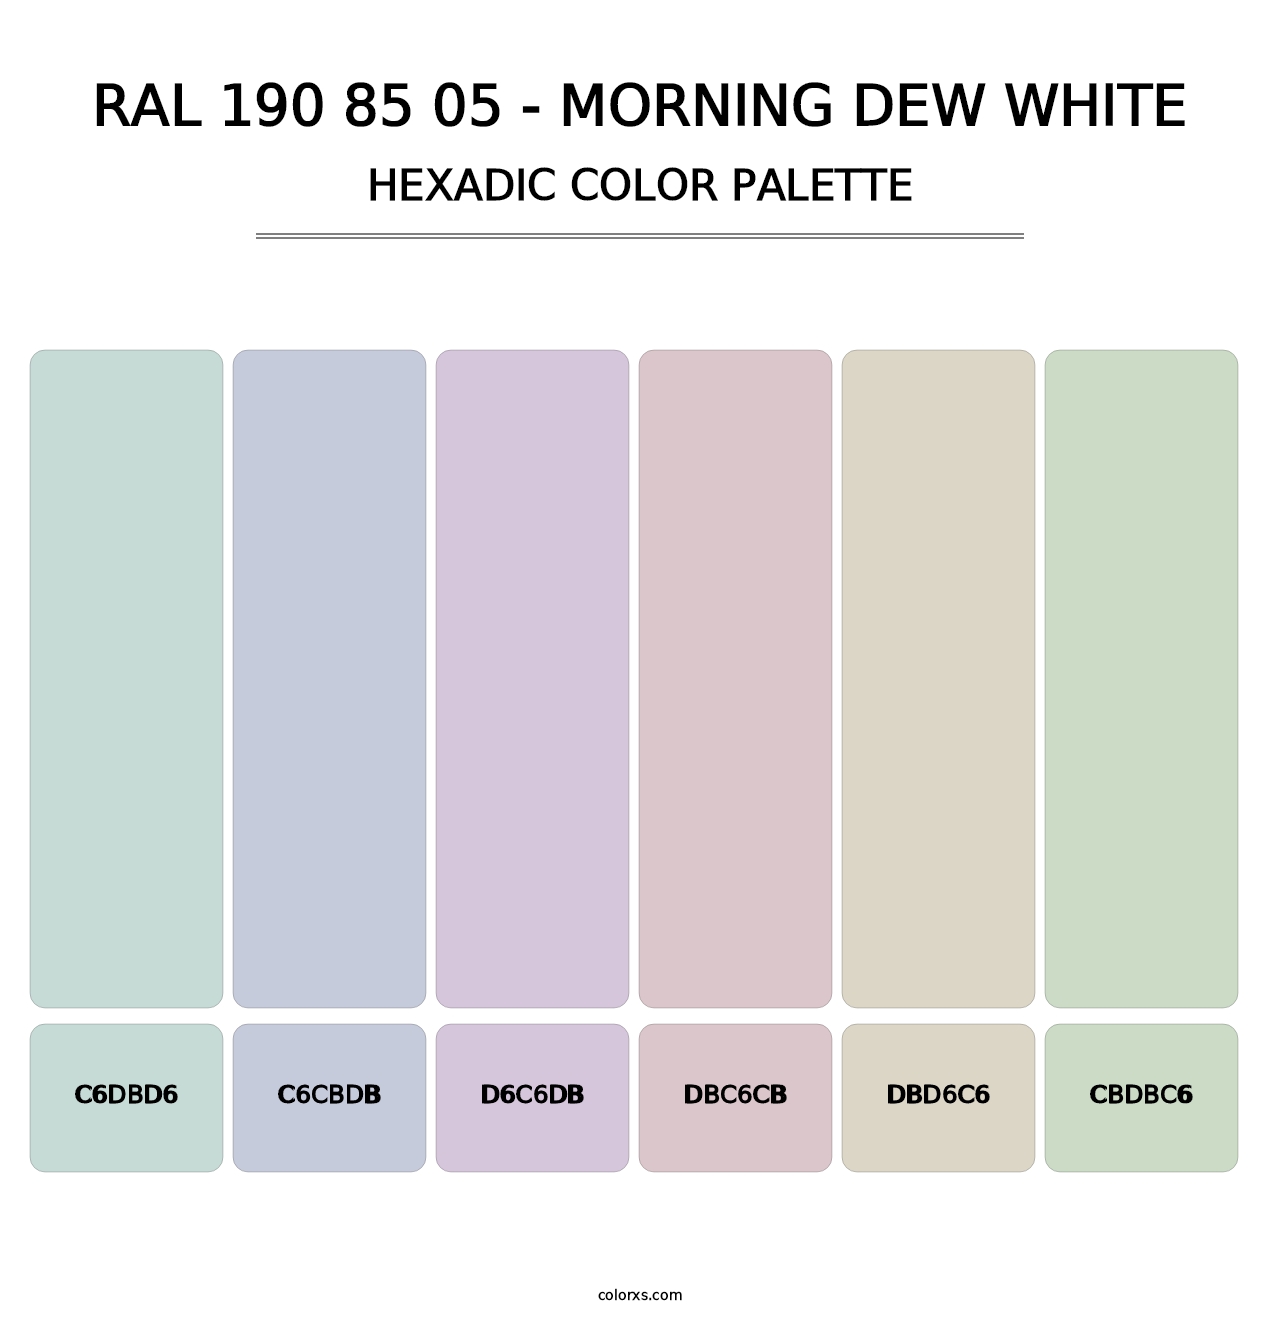 RAL 190 85 05 - Morning Dew White - Hexadic Color Palette